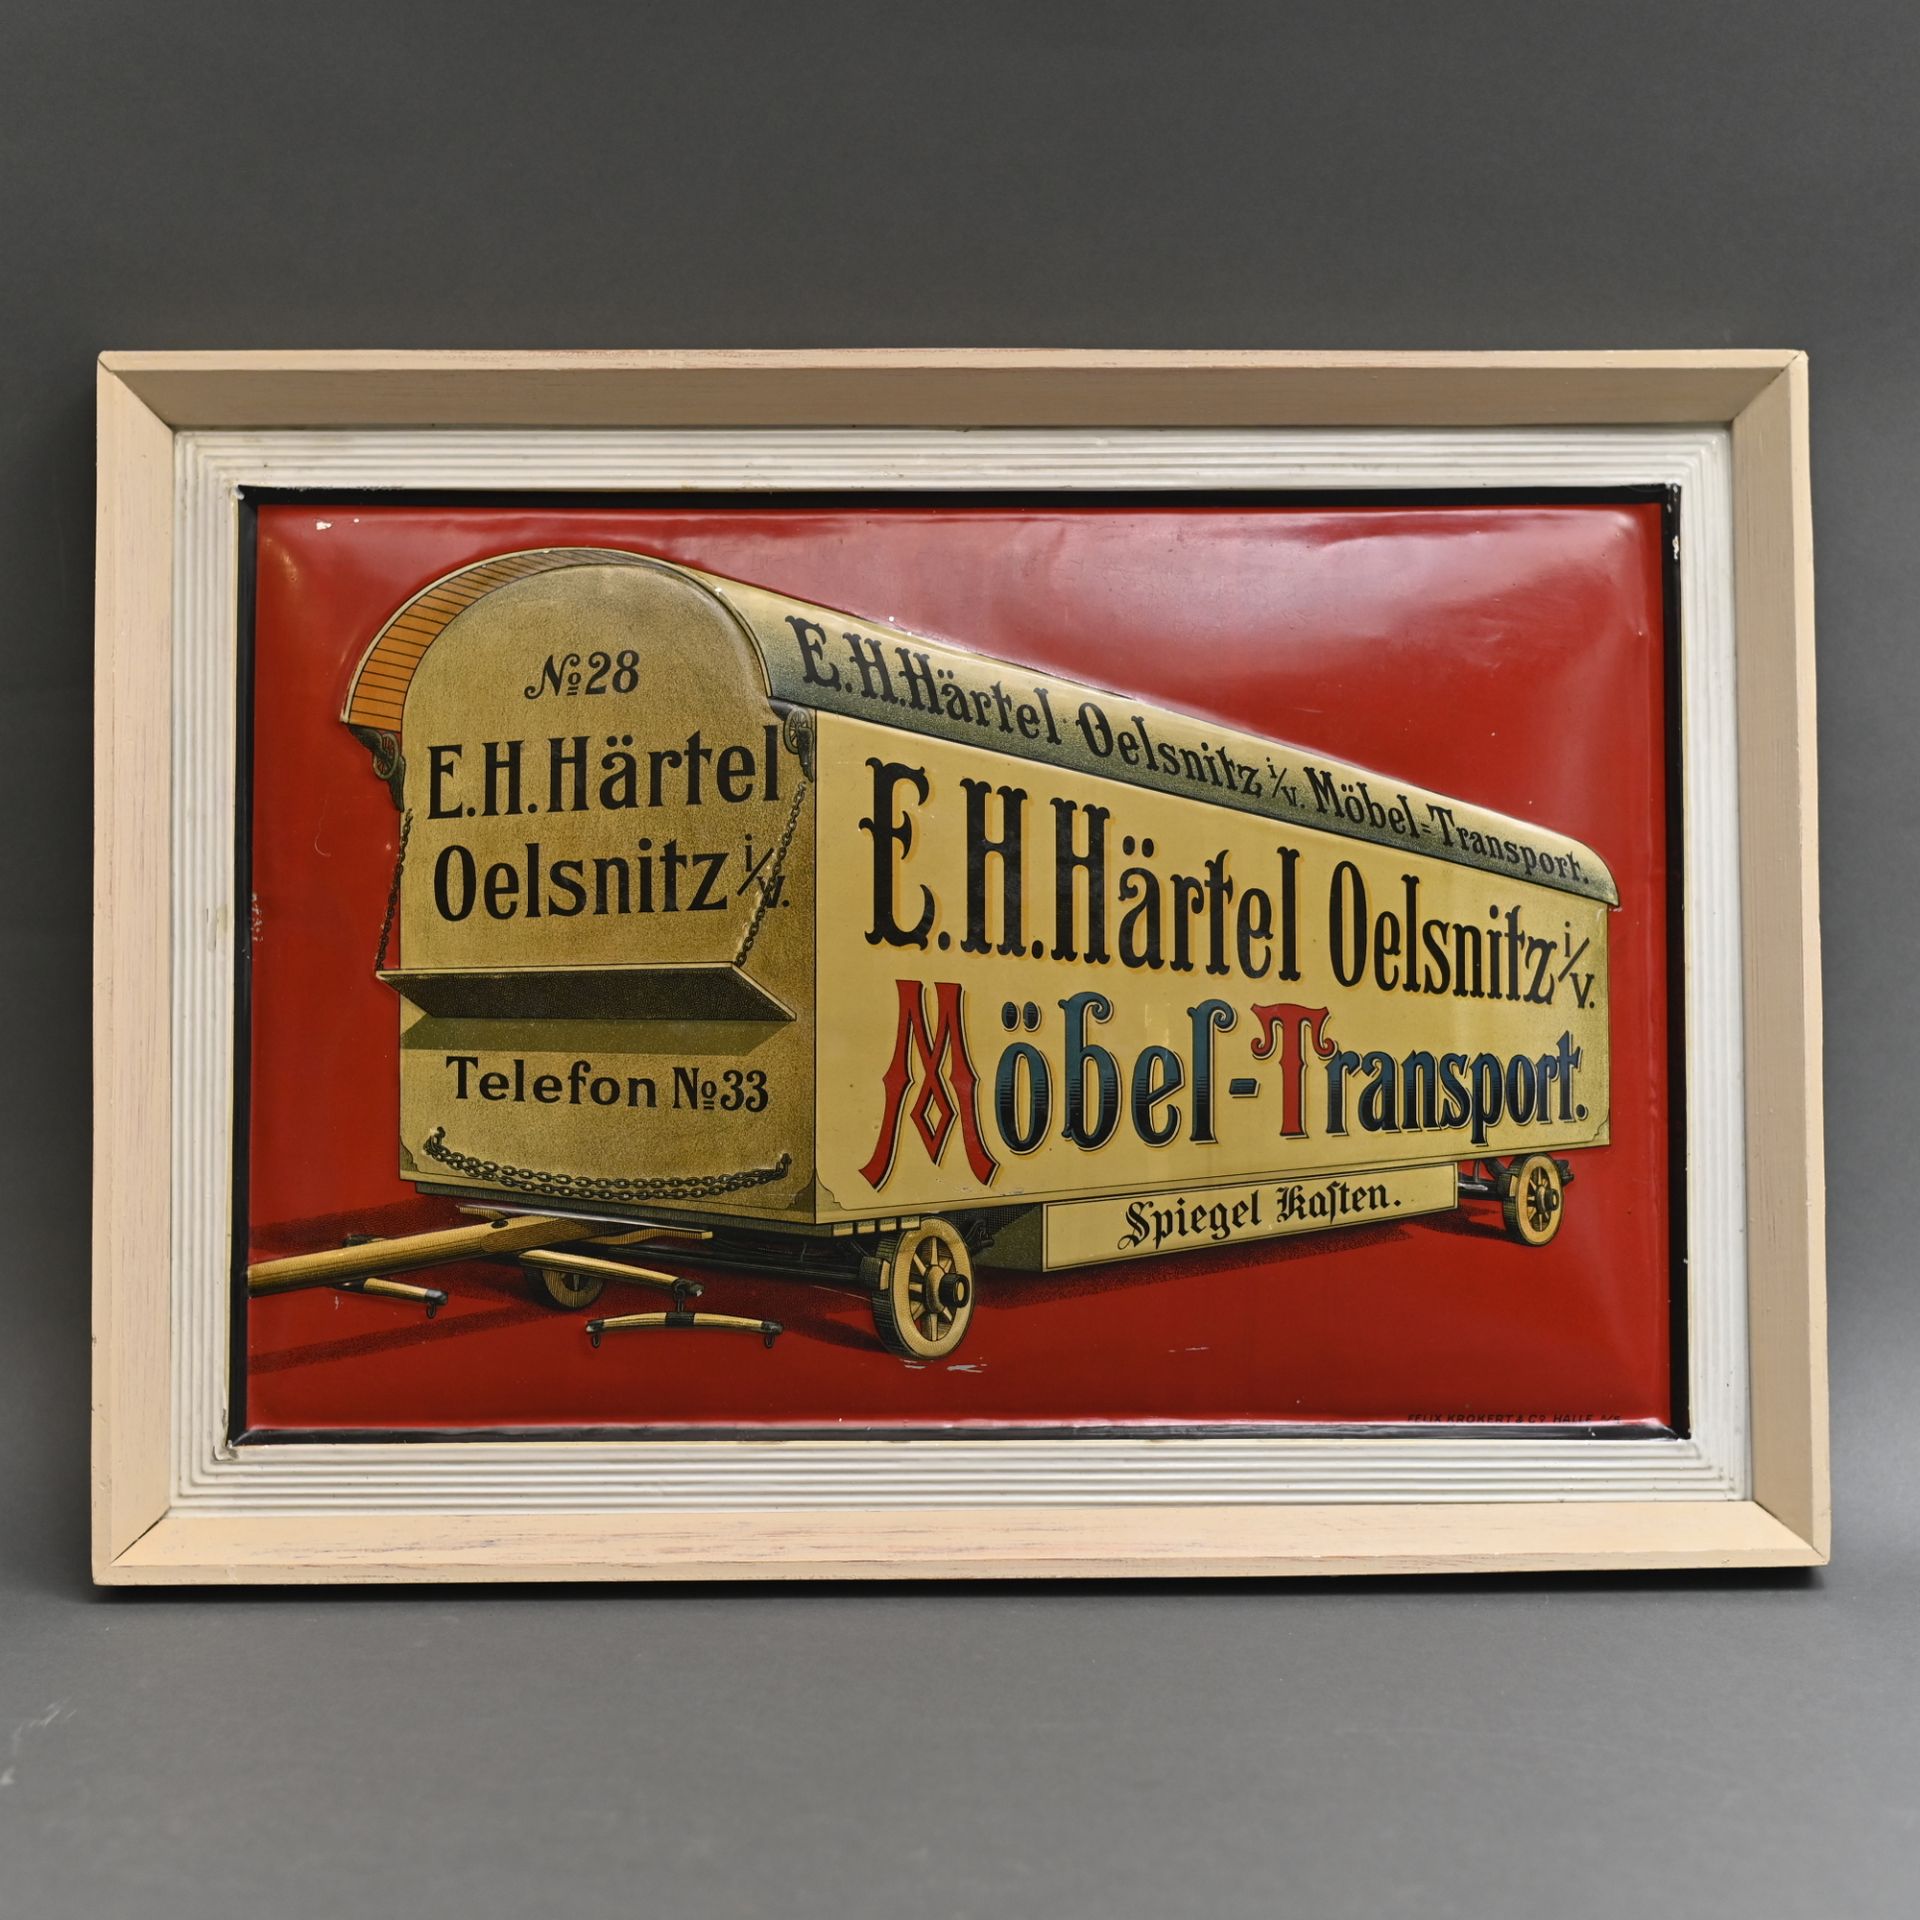 Original Blechschild "Möbel-Transport E.H. Härtel Oelsnitz i. Vogtl.", um 1920, Hersteller Felix